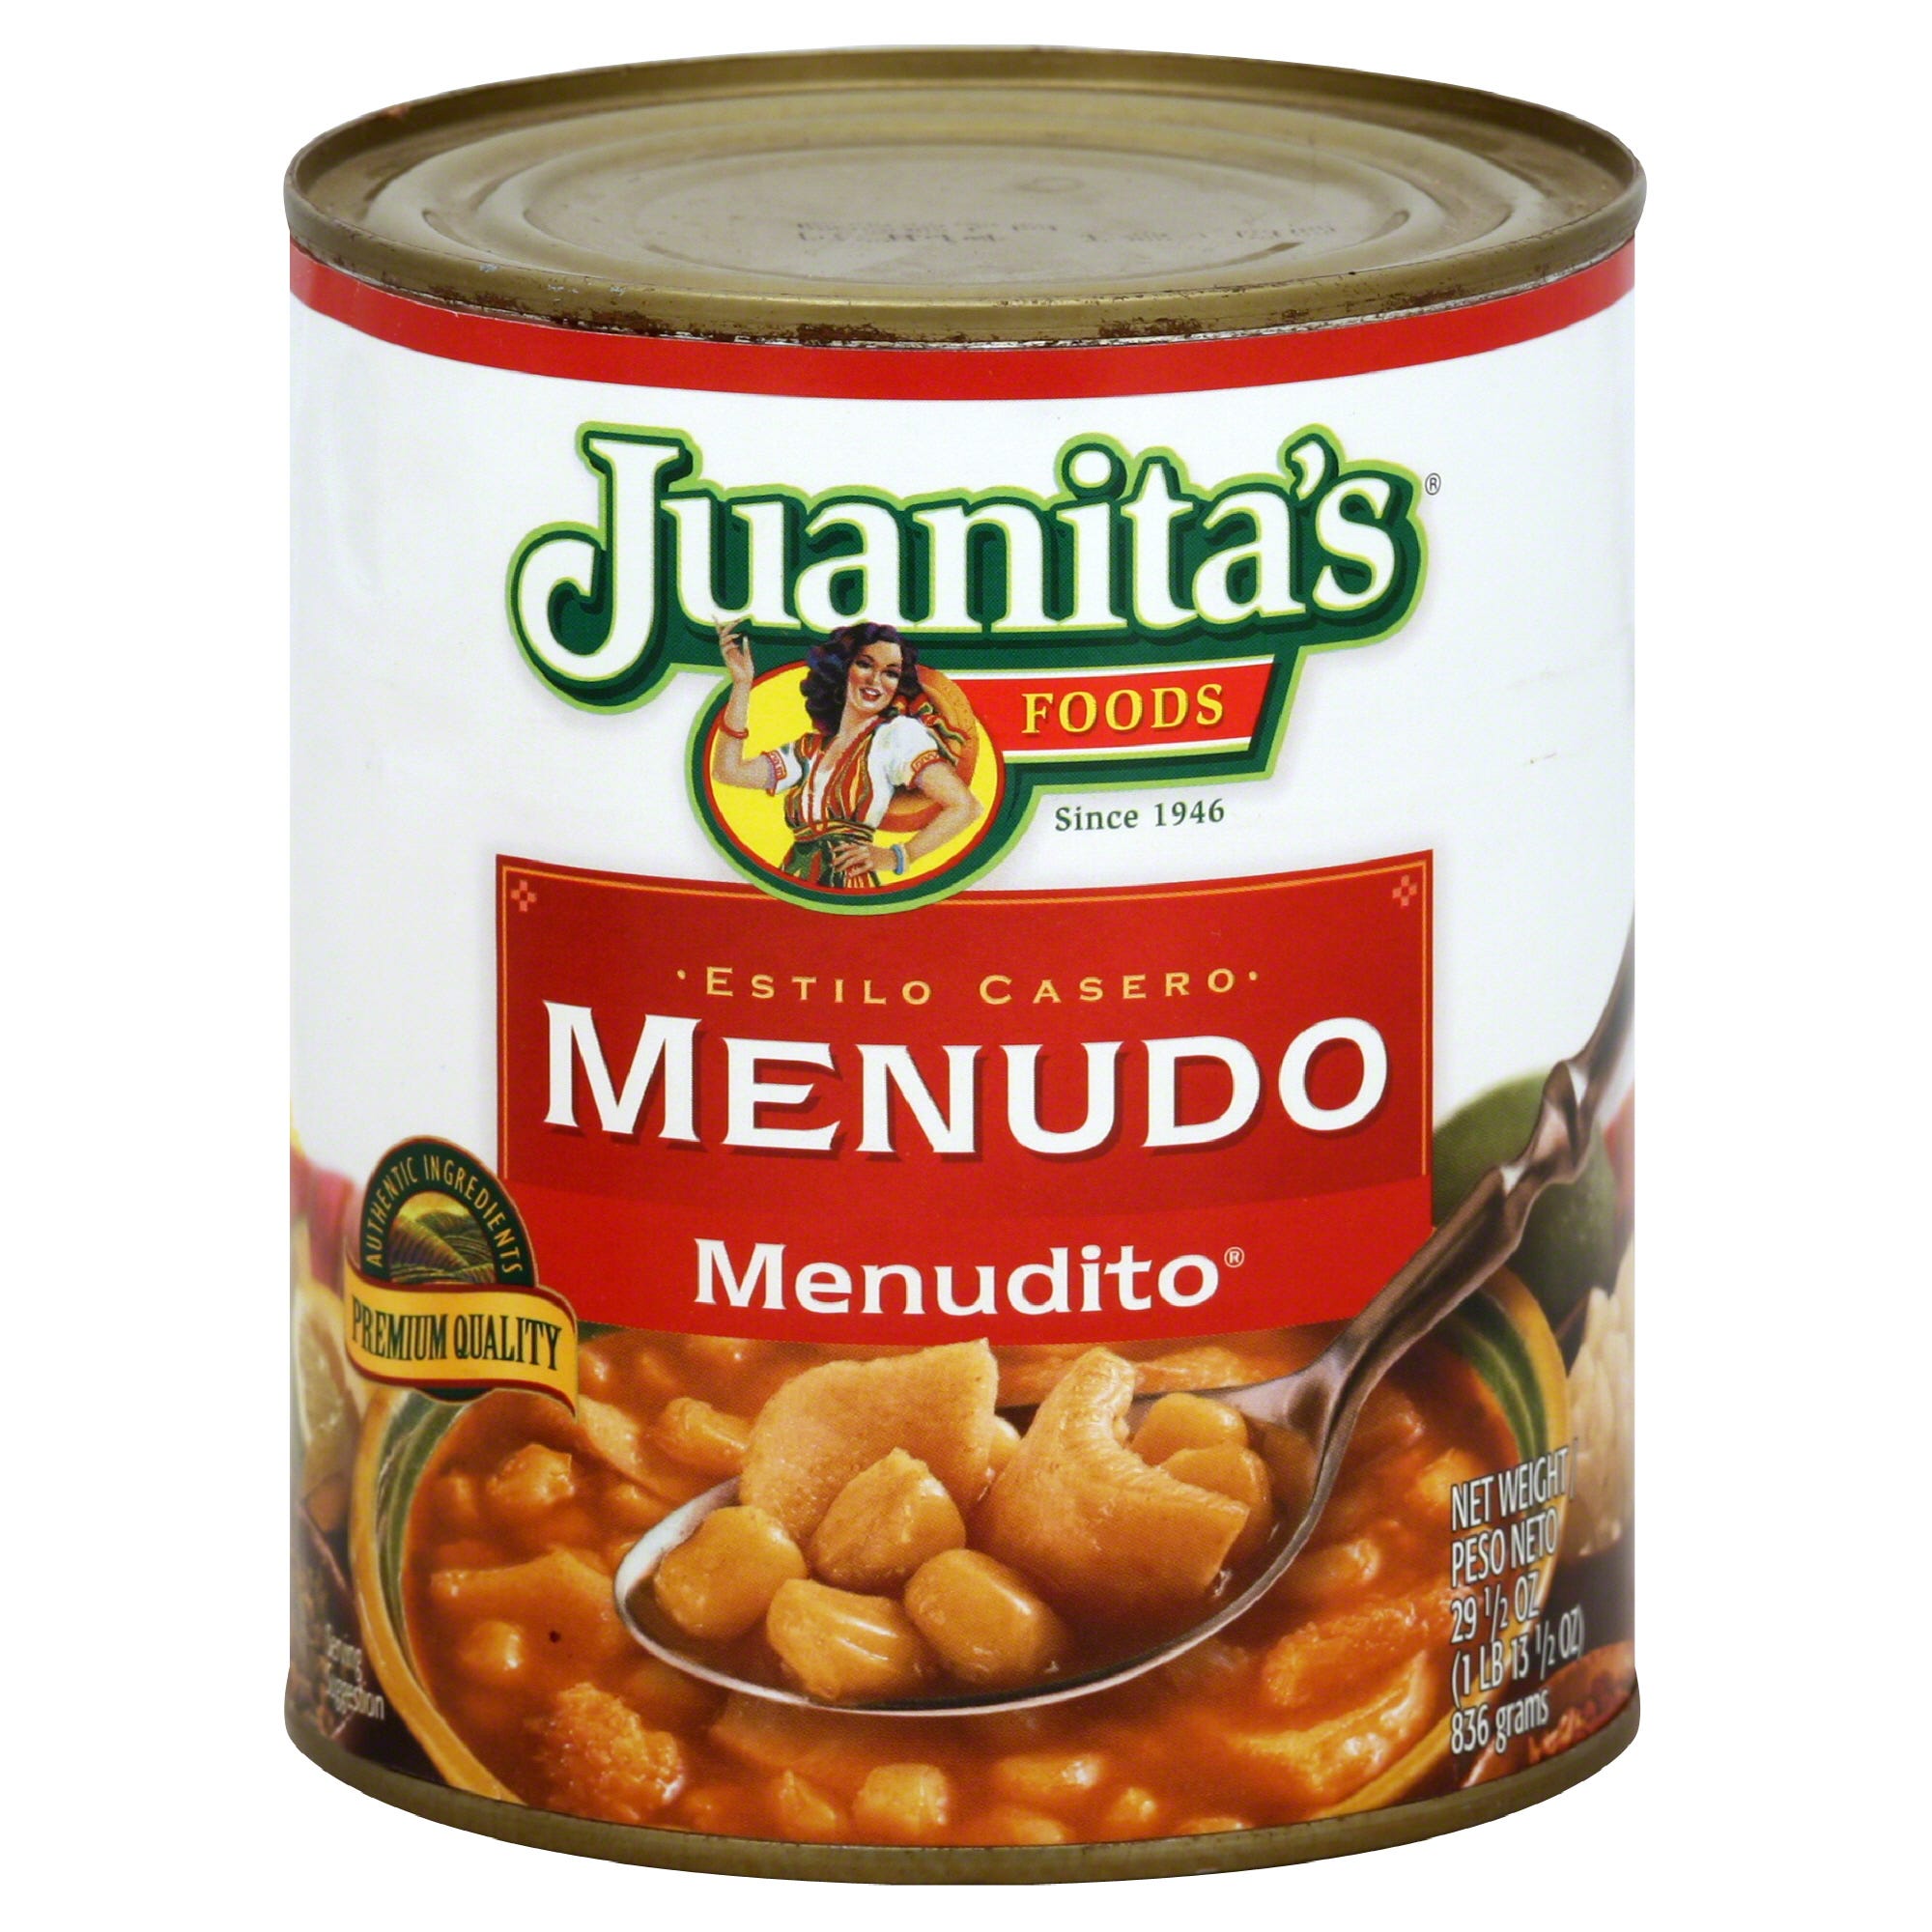 Juanitas Menudo, Menudito - 29.5 oz